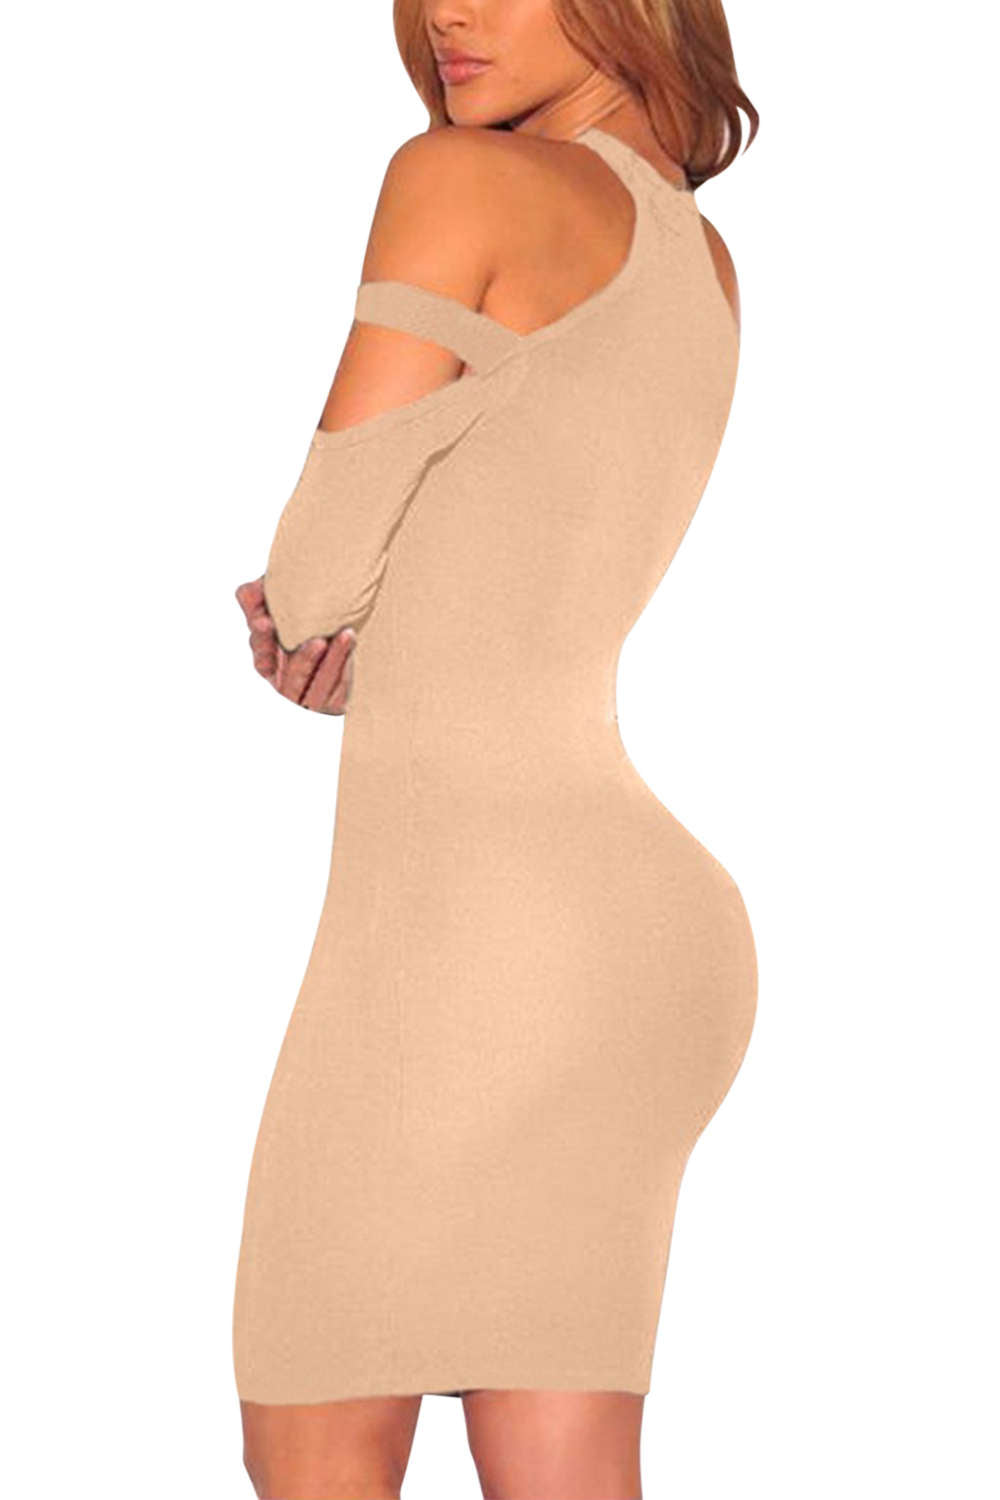 Iyasson Womens Sexy Long Sleeve Cold Shoulder Bodycon Club Dresses